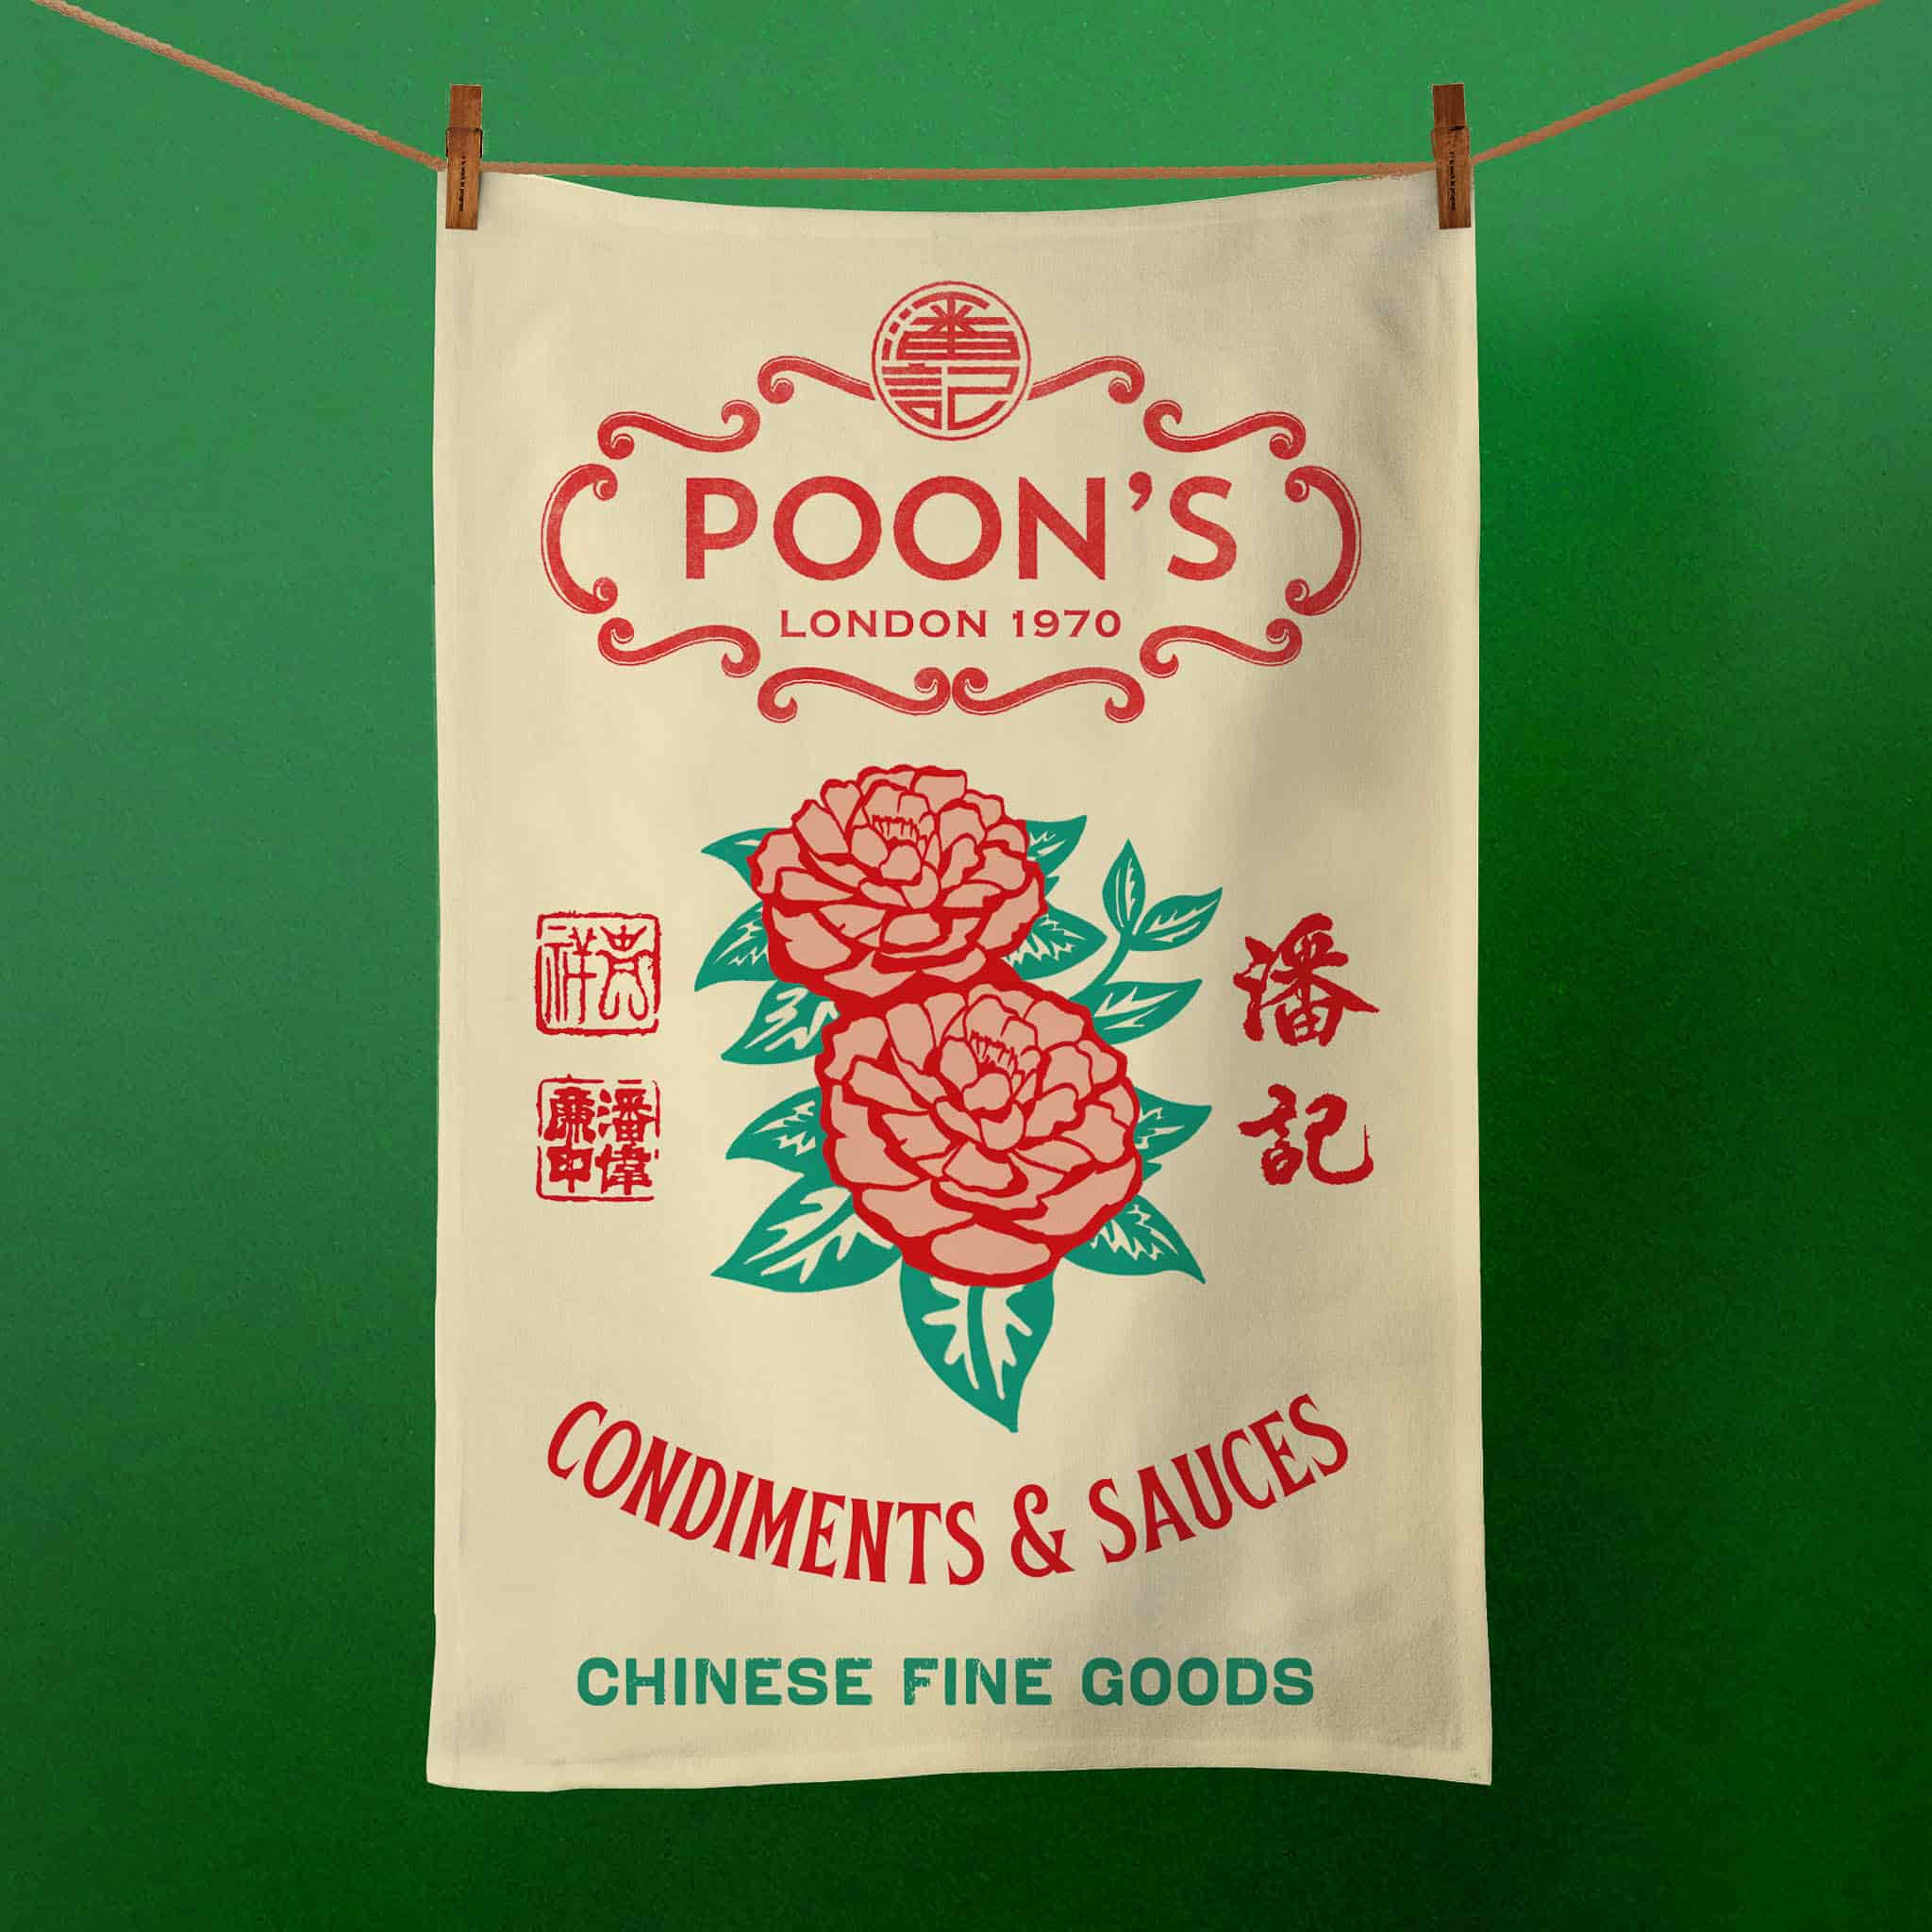 Poon's London Rice Sack Design Tea Towel